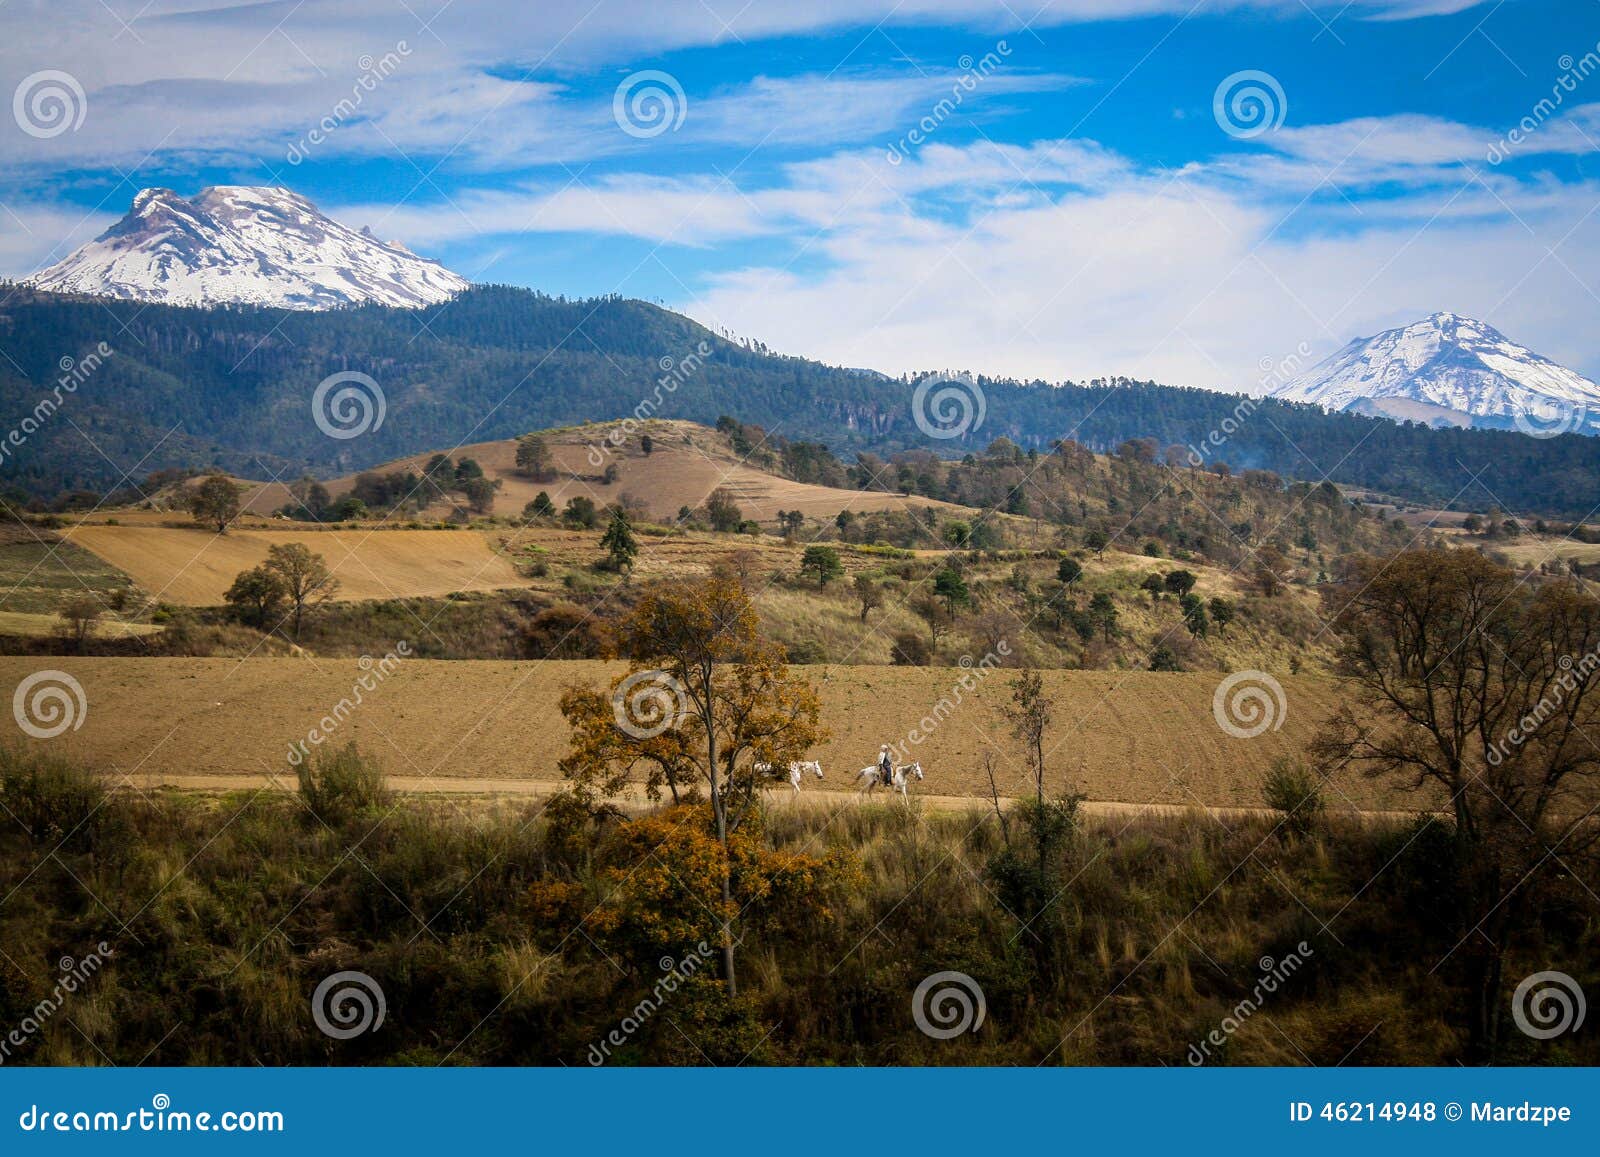 landscape photo of popocatepetl and iztaccihuatl volcanoes in ce